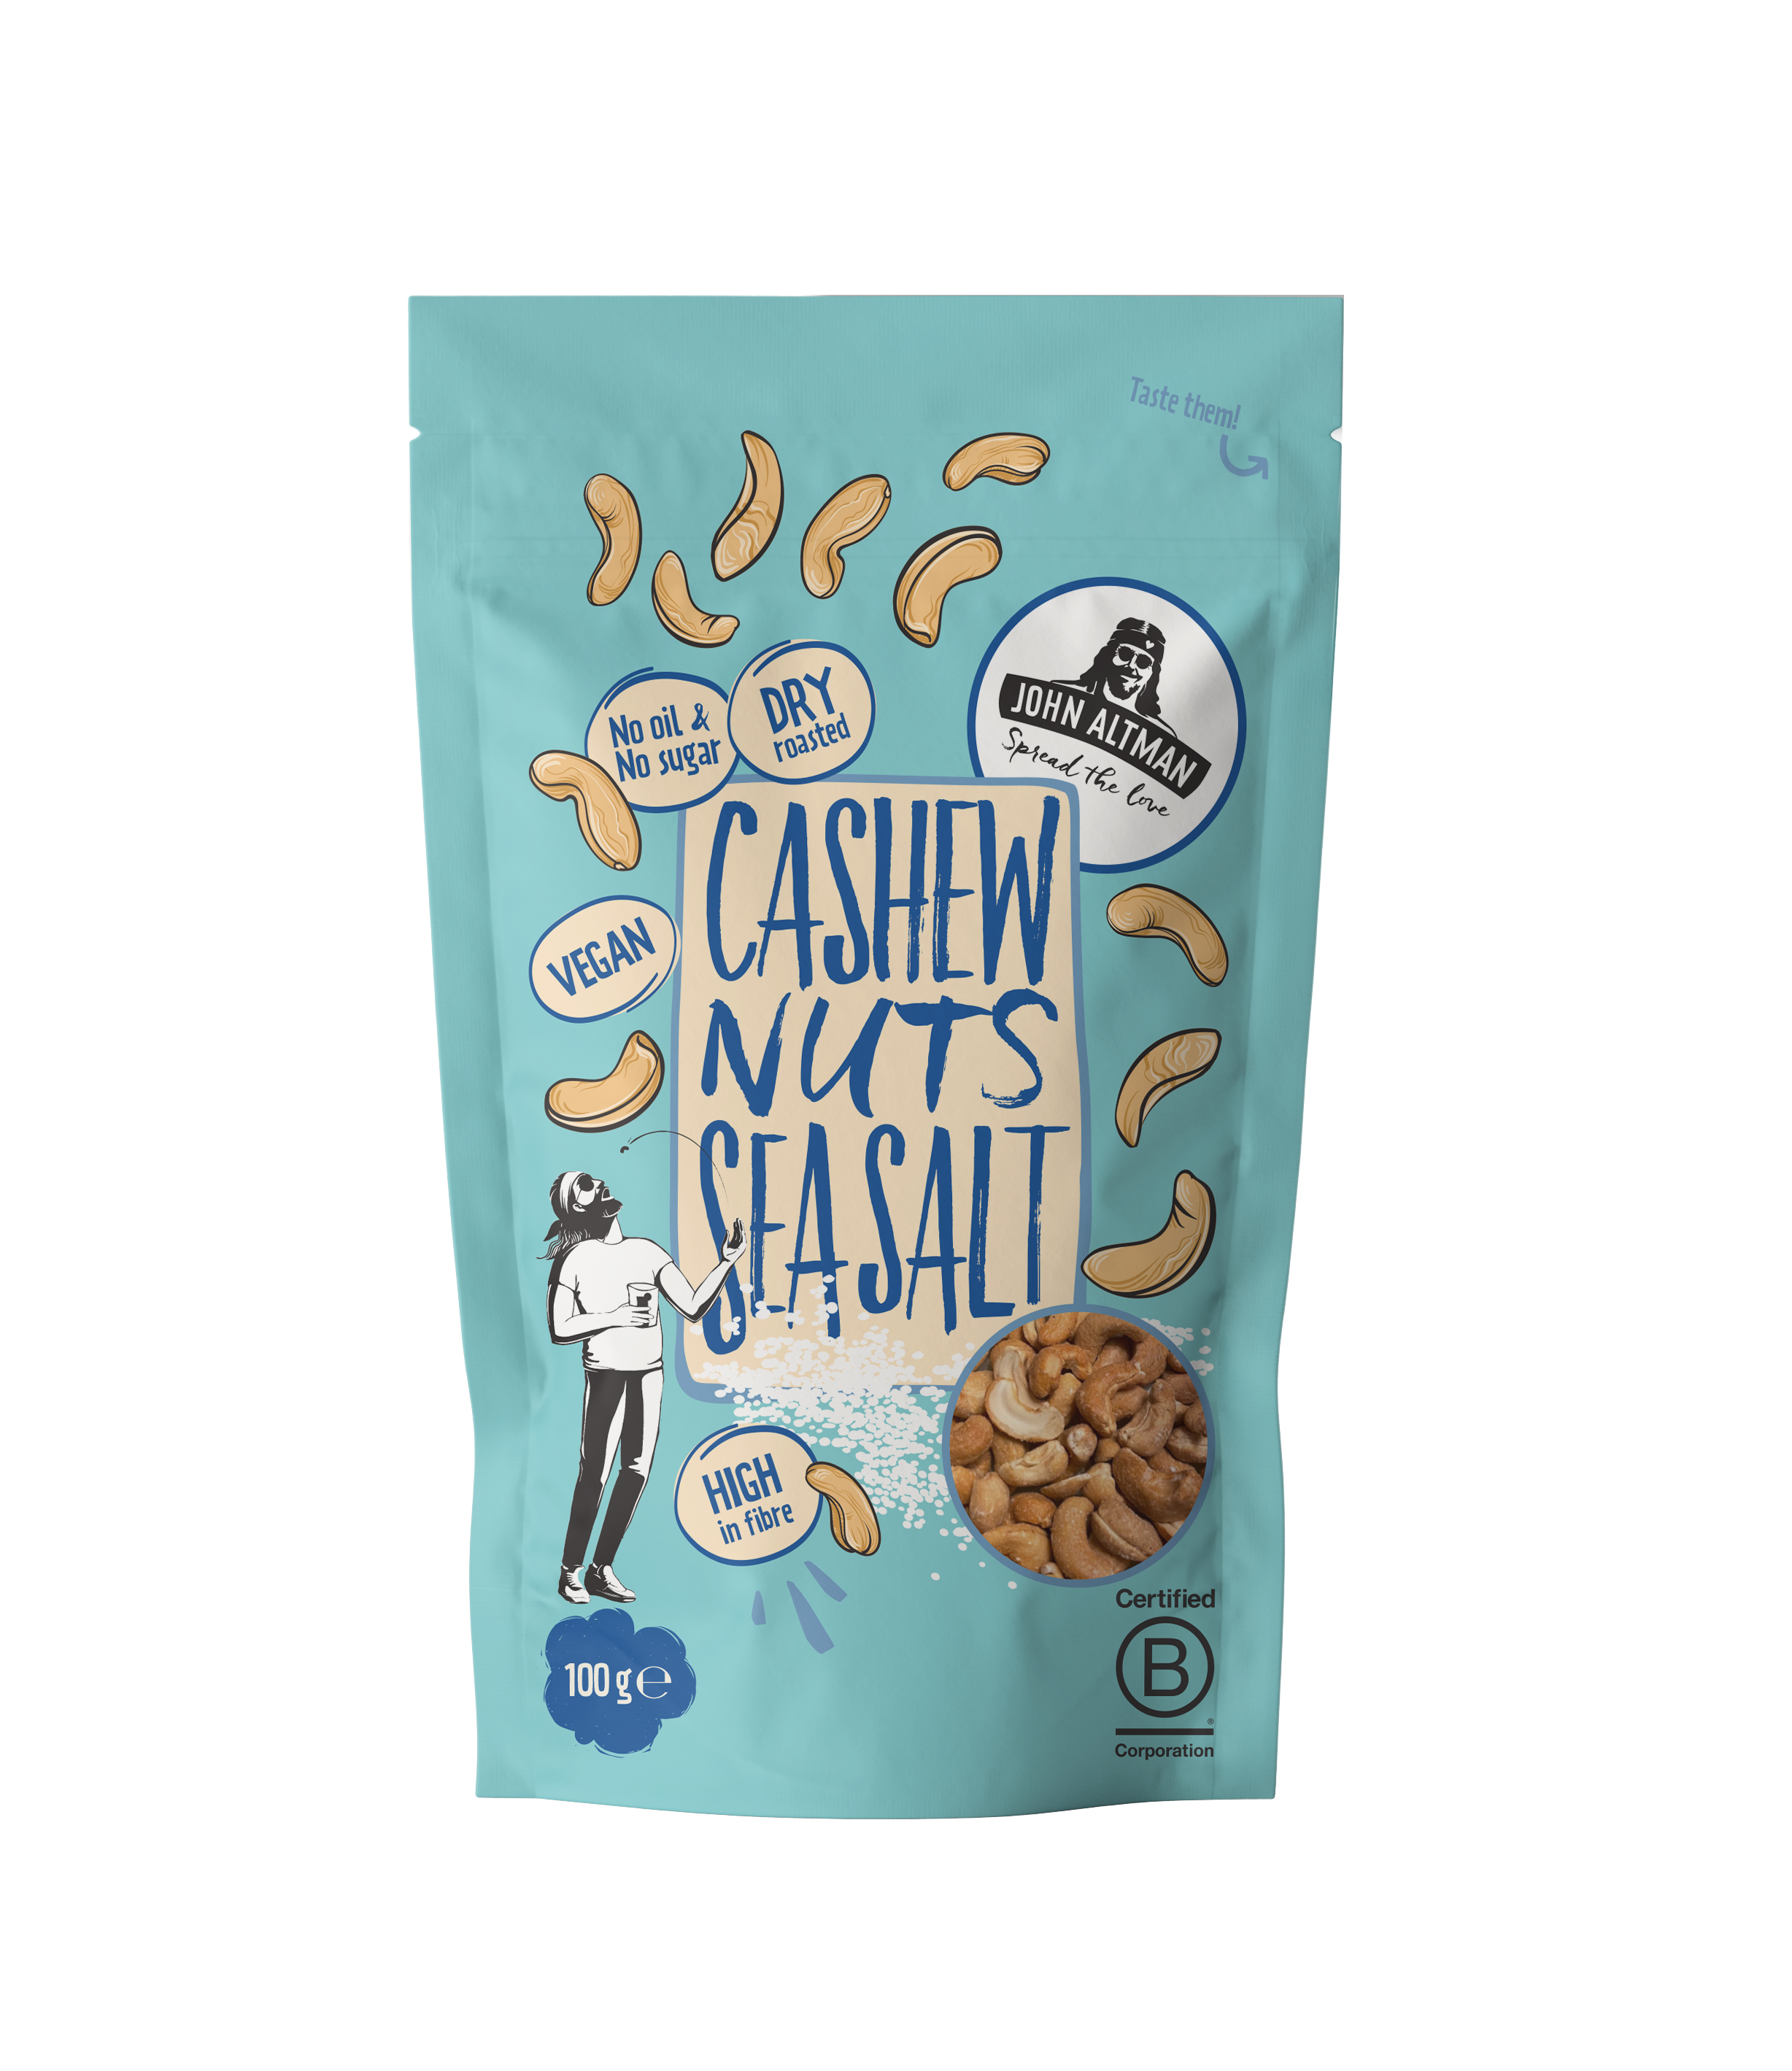 Dry roasted Cashew Nuts Sea Salt - John Altman